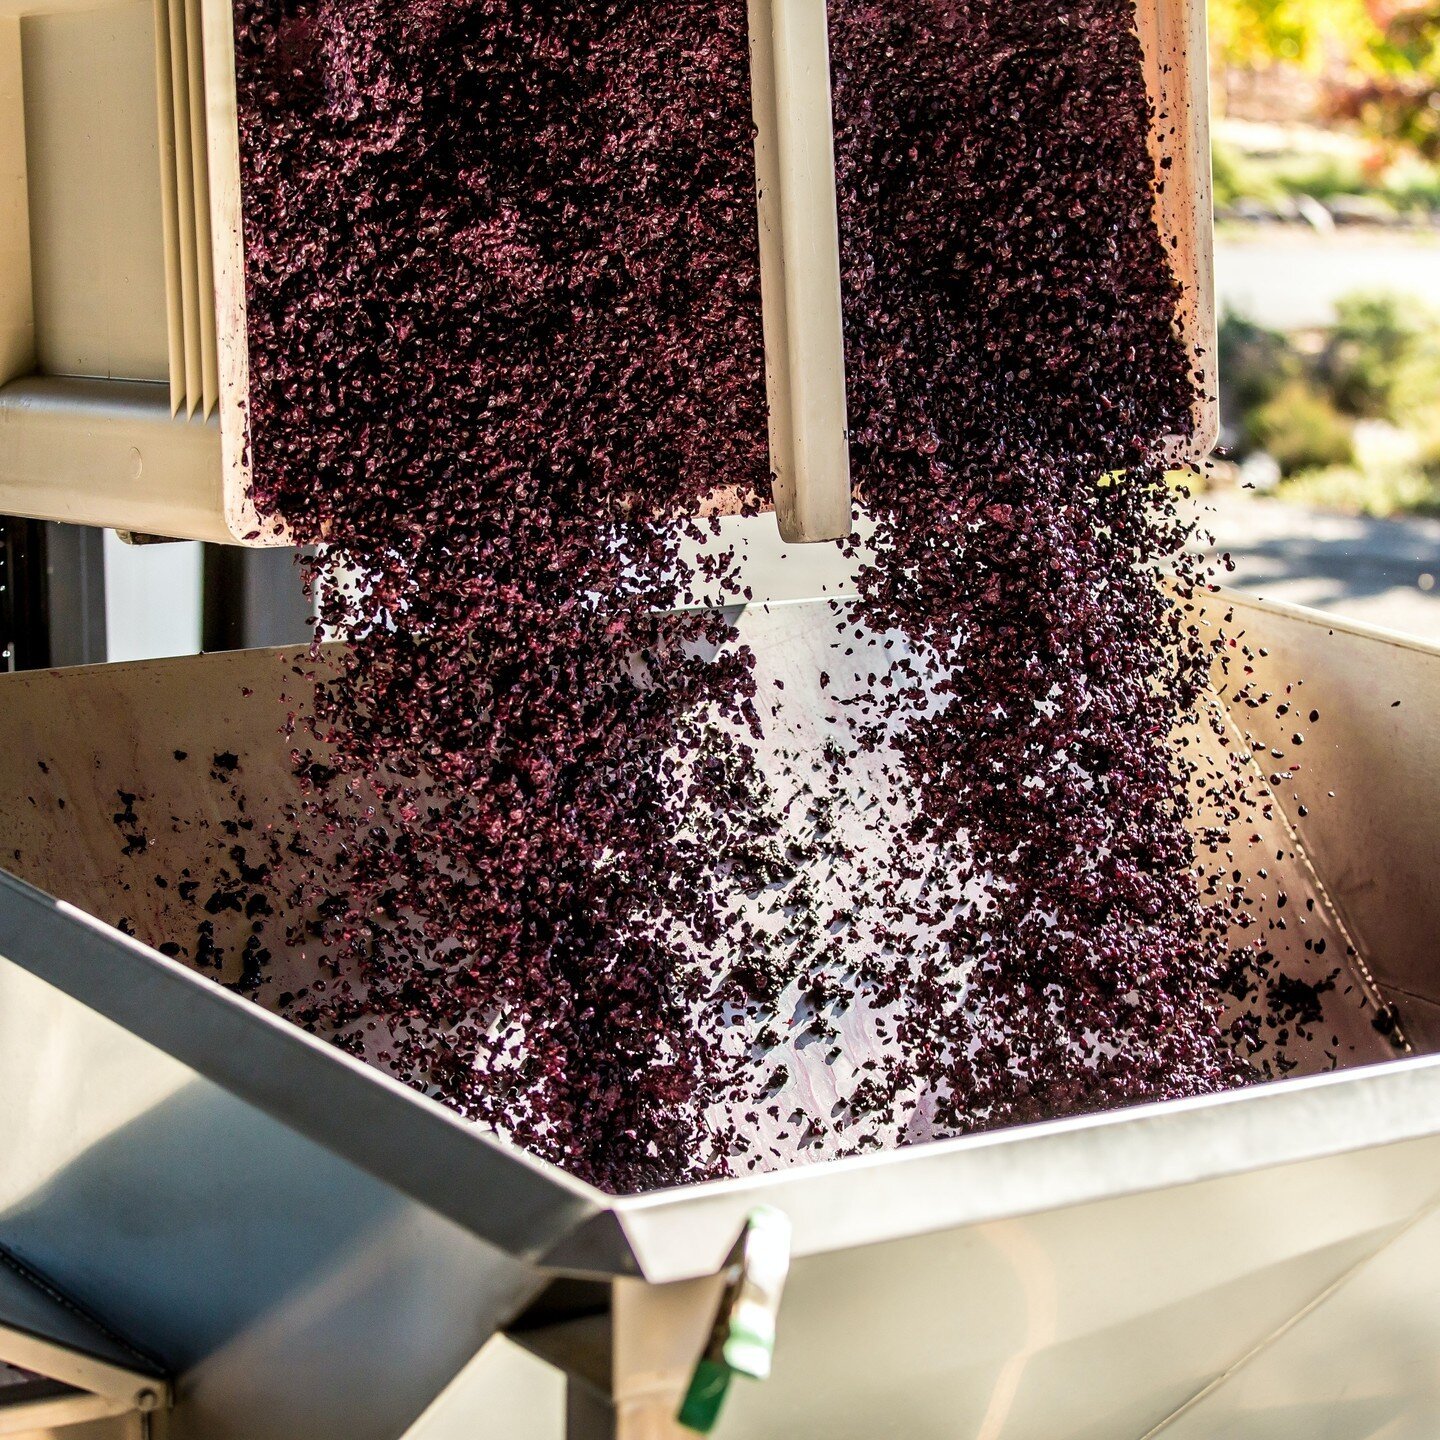 Winemaking in action. Crushing and destemming prior to fermentation.⁠
⁠
⁠
#sunvalleywineco #wineproduction #winemaker #winery #vineyard #australianwine